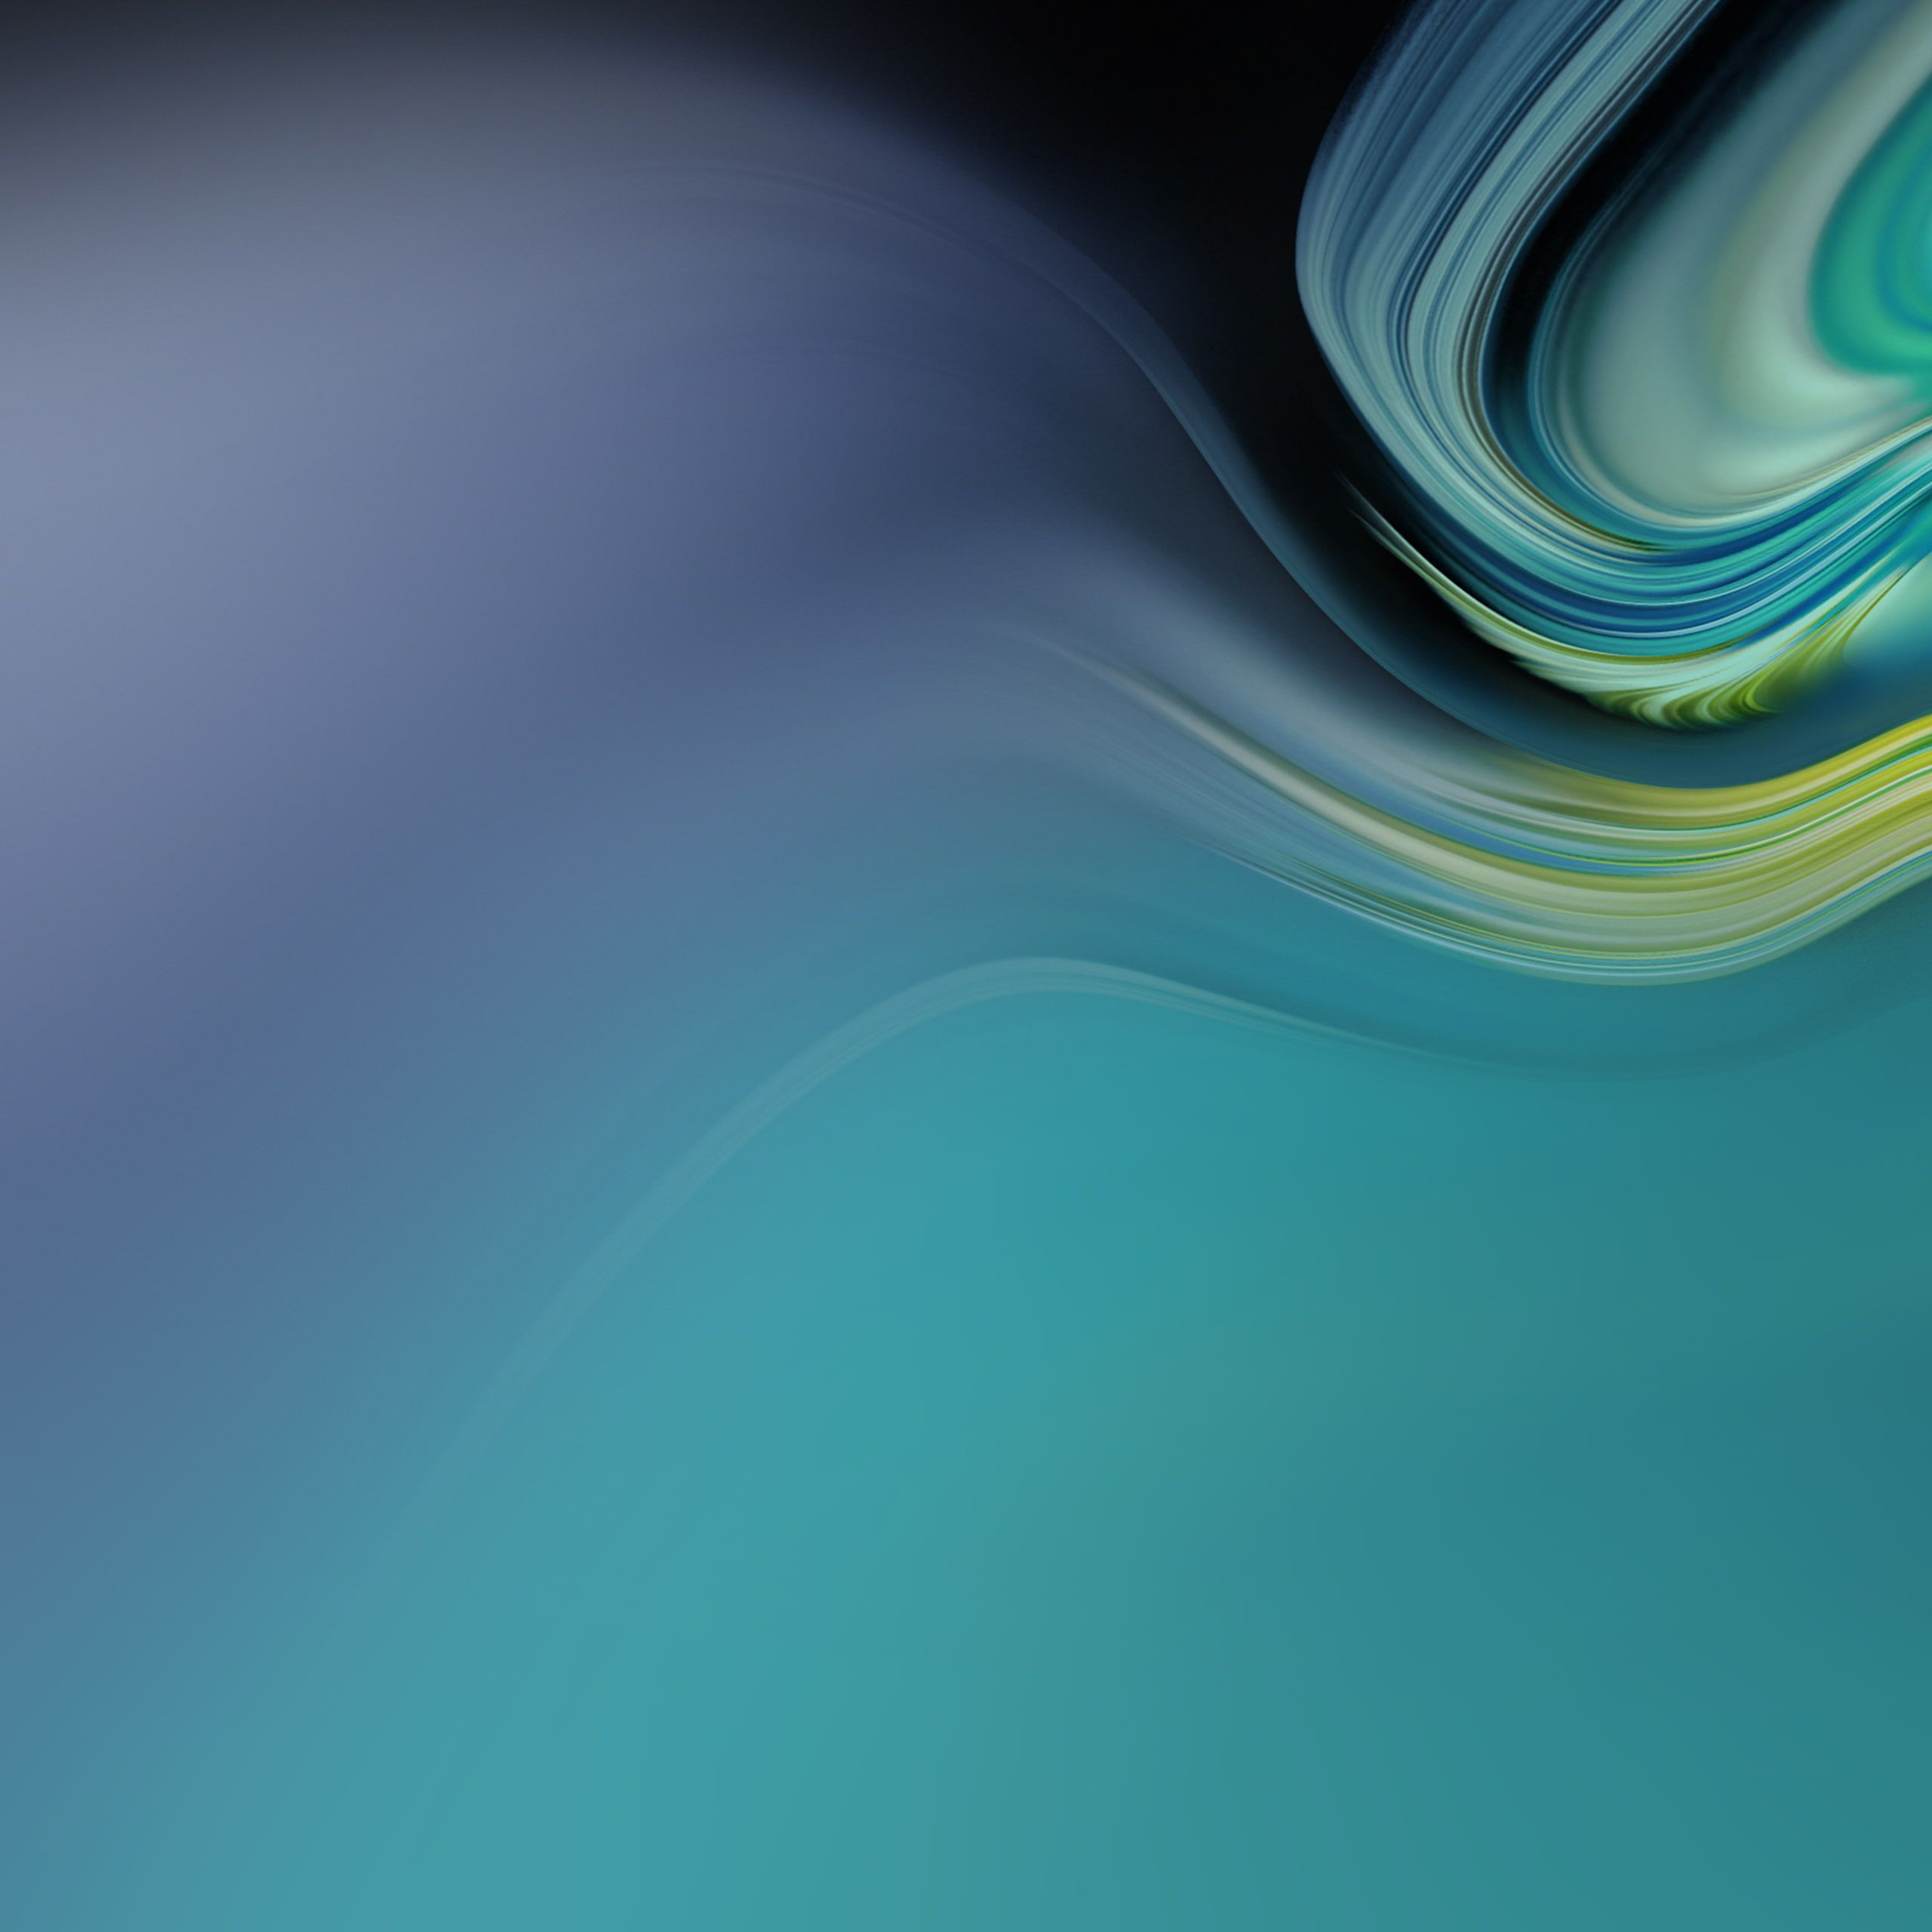 Stock Samsung Galaxy Tab S4 #Turquoise #Teal #Waves #Gradient K #wallpaper #hdwallpaper #des. iPad pro wallpaper, Original iphone wallpaper, Samsung galaxy tab